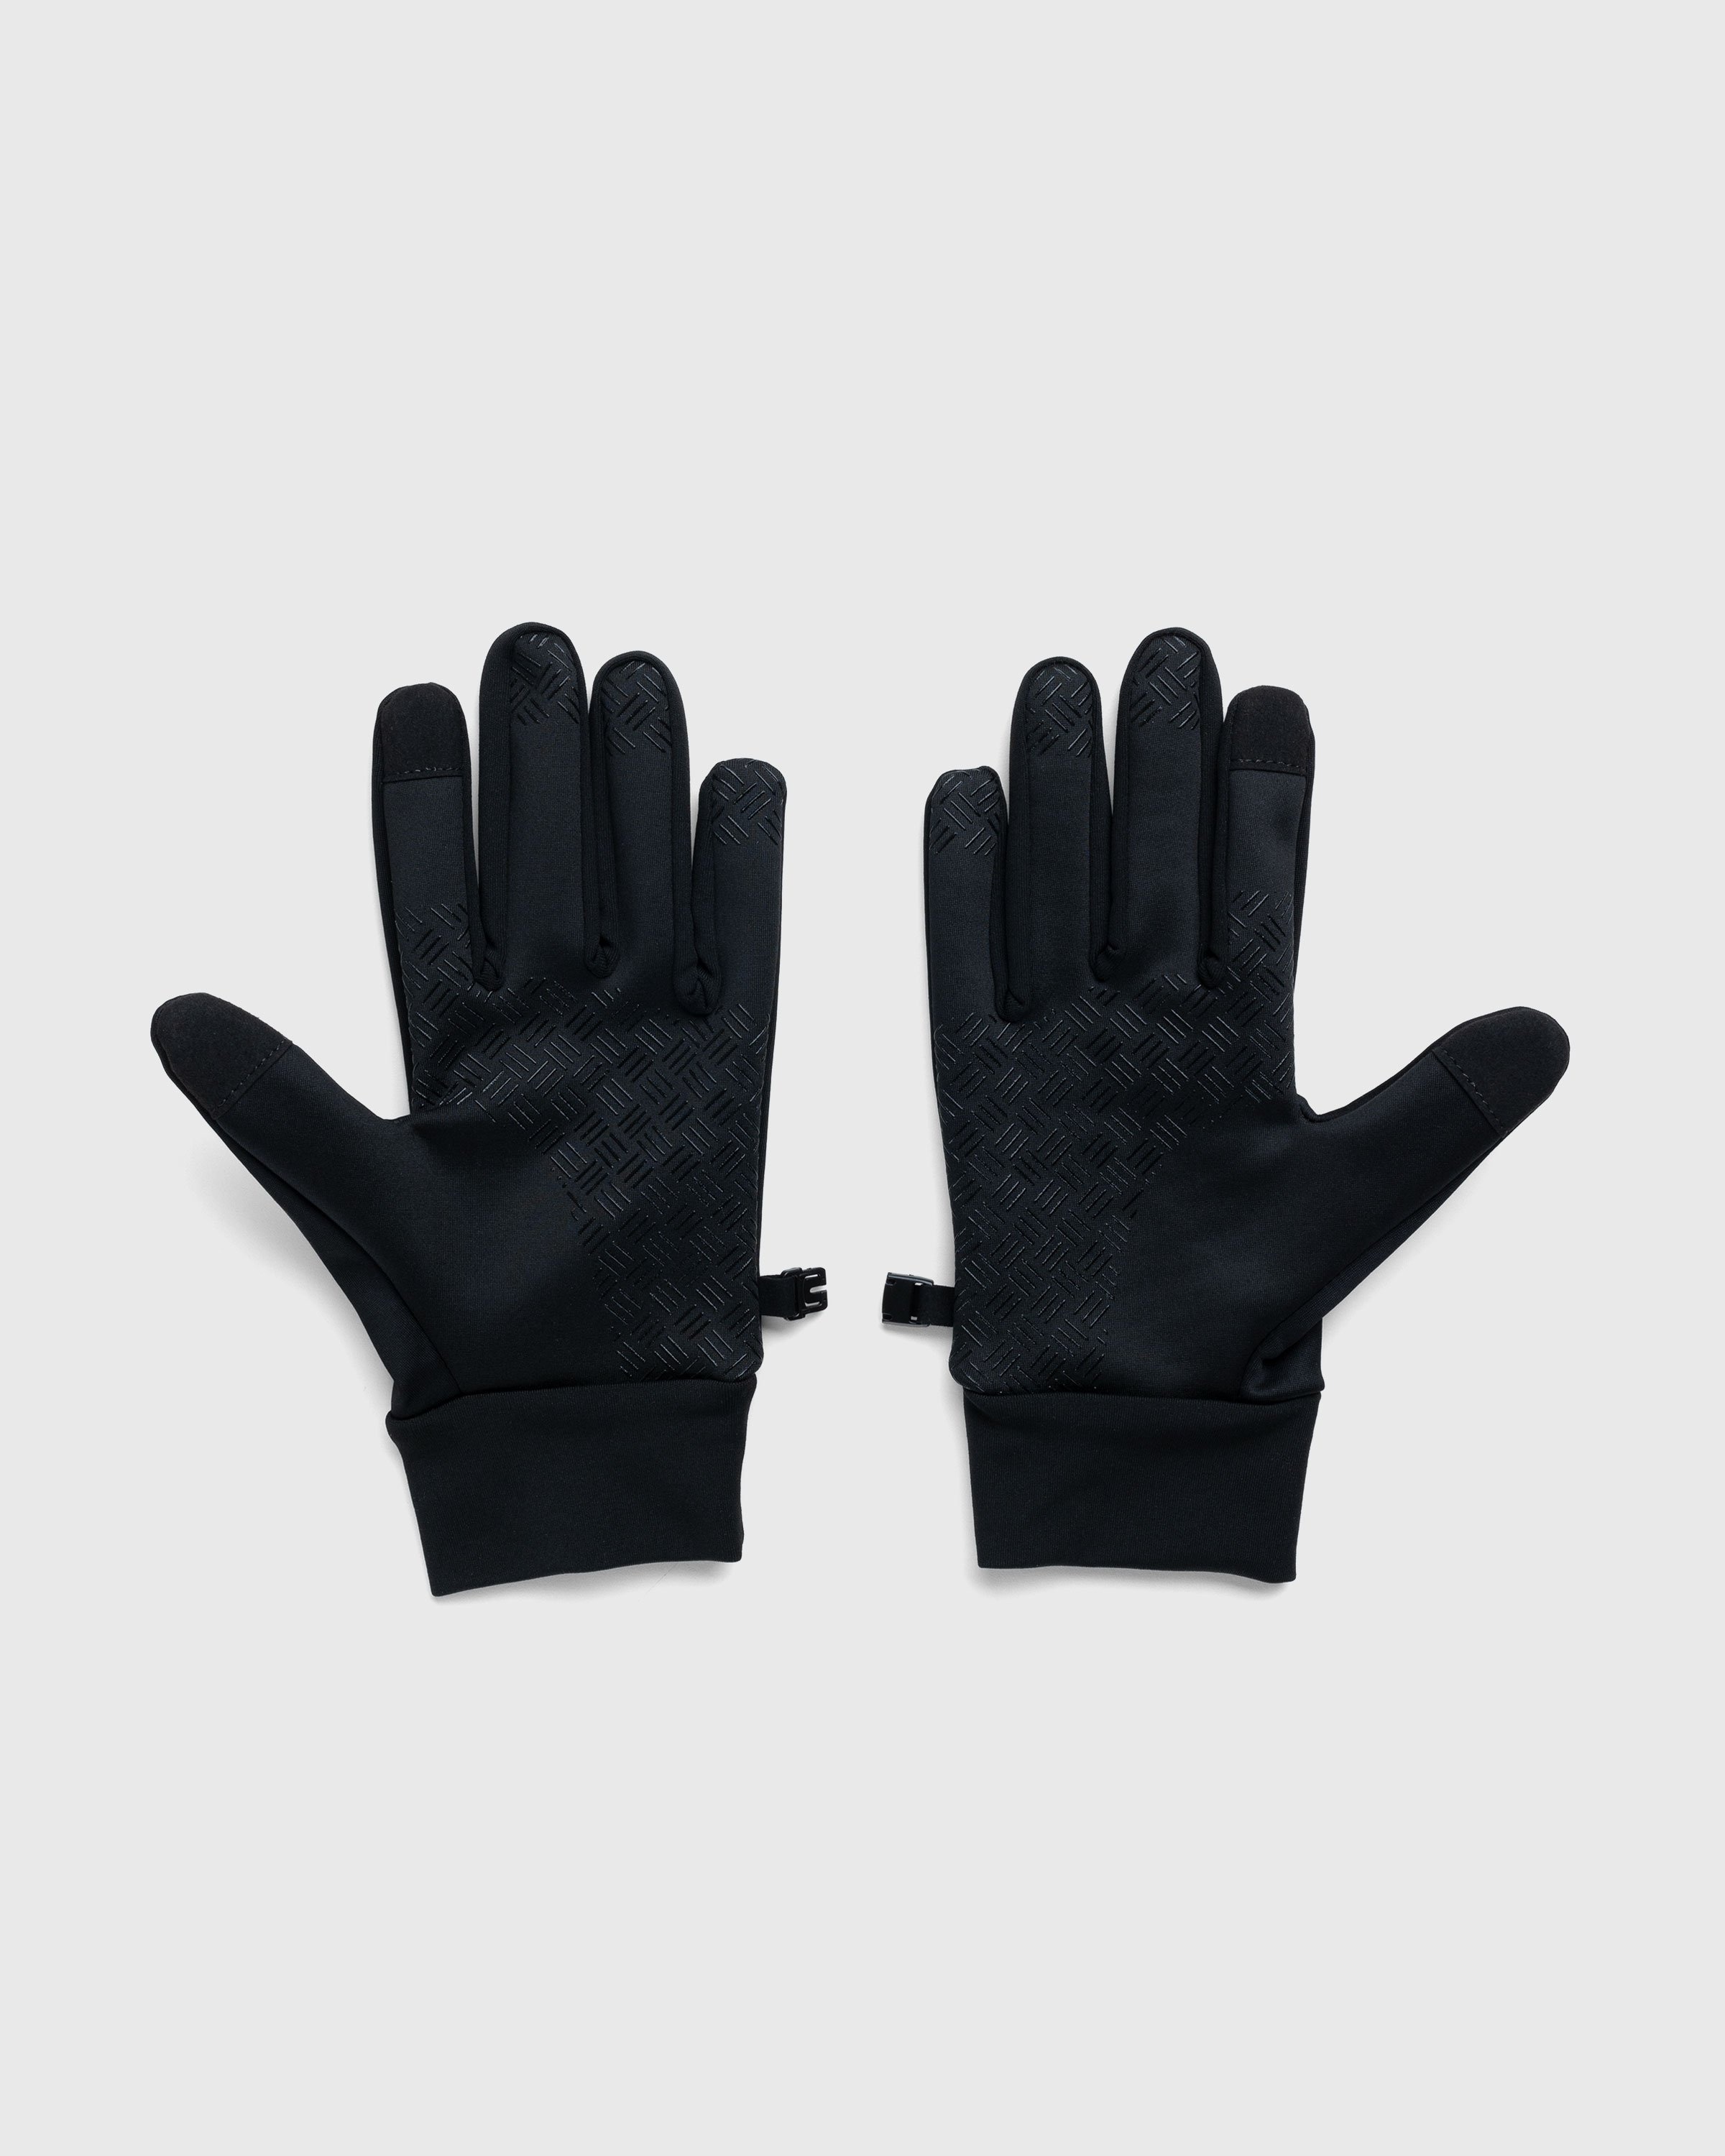 A-Cold-Wall* – Stria Tech Gloves Black - 5-Finger - Black - Image 2